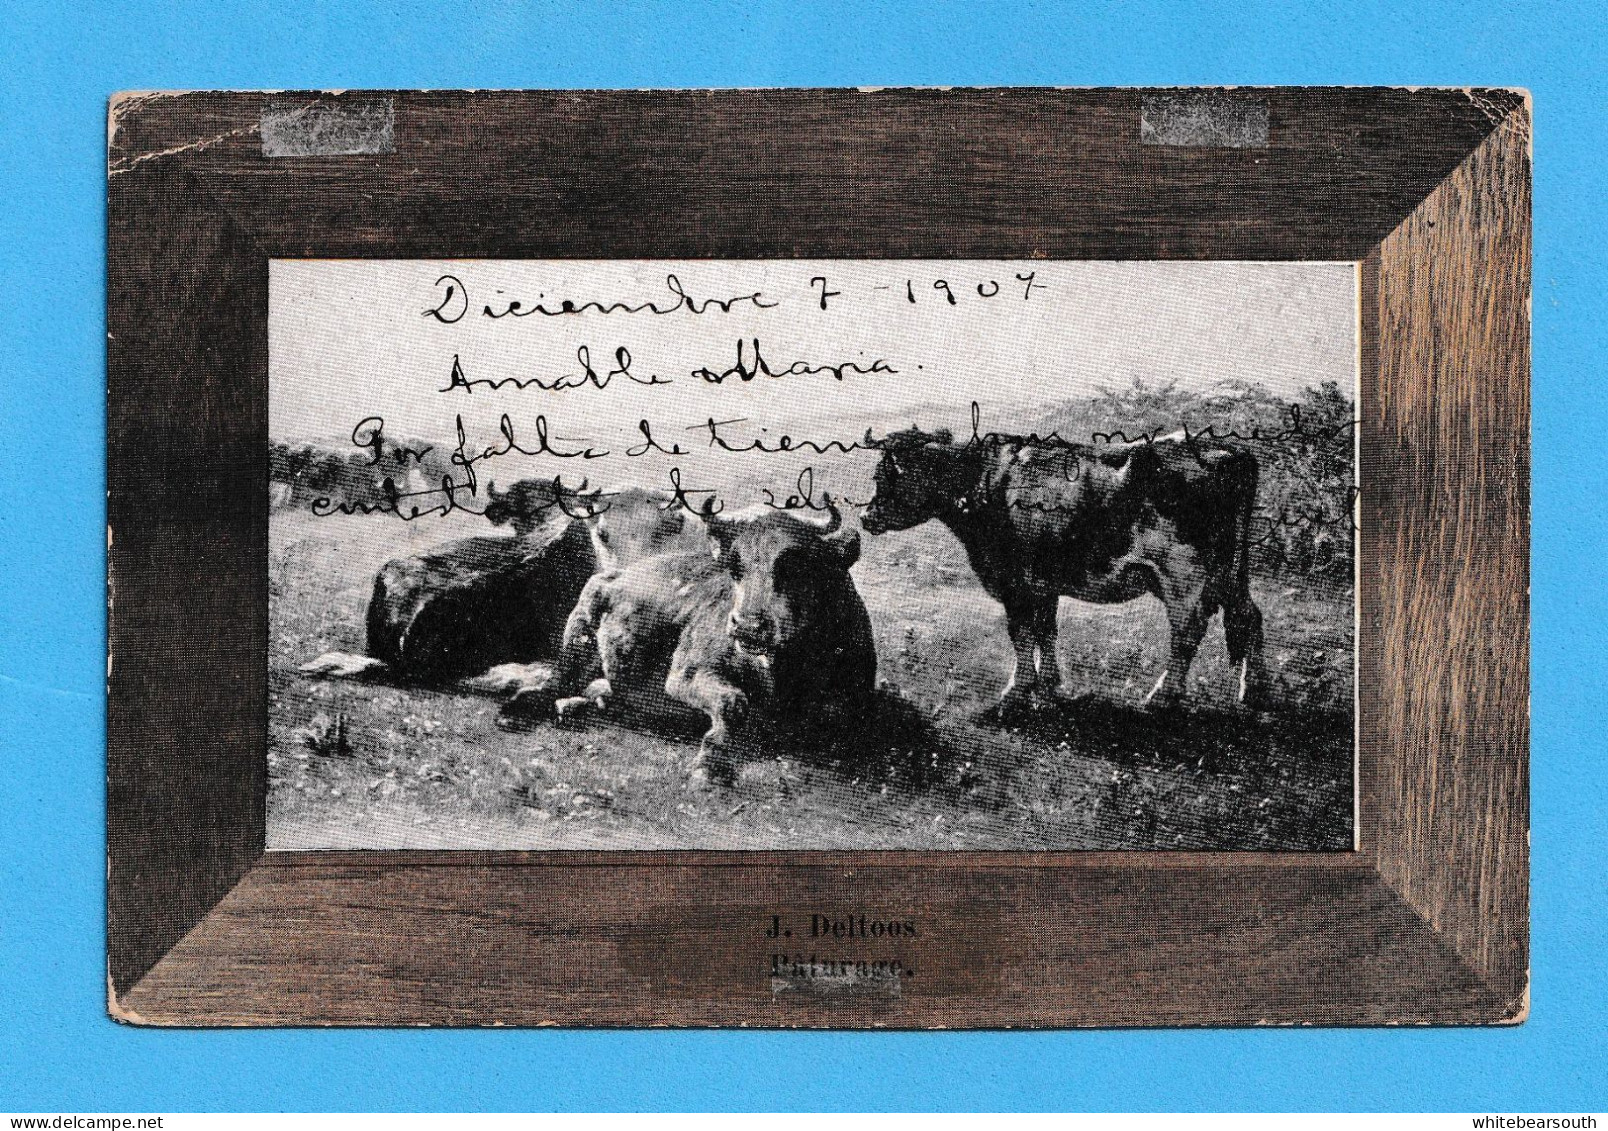 460 - FRANCE FARM CAMPO J. DELTOOS PATORAGE PASTOREO TORO COW VACA GANADO  RARE  POSTCARD - Tauri